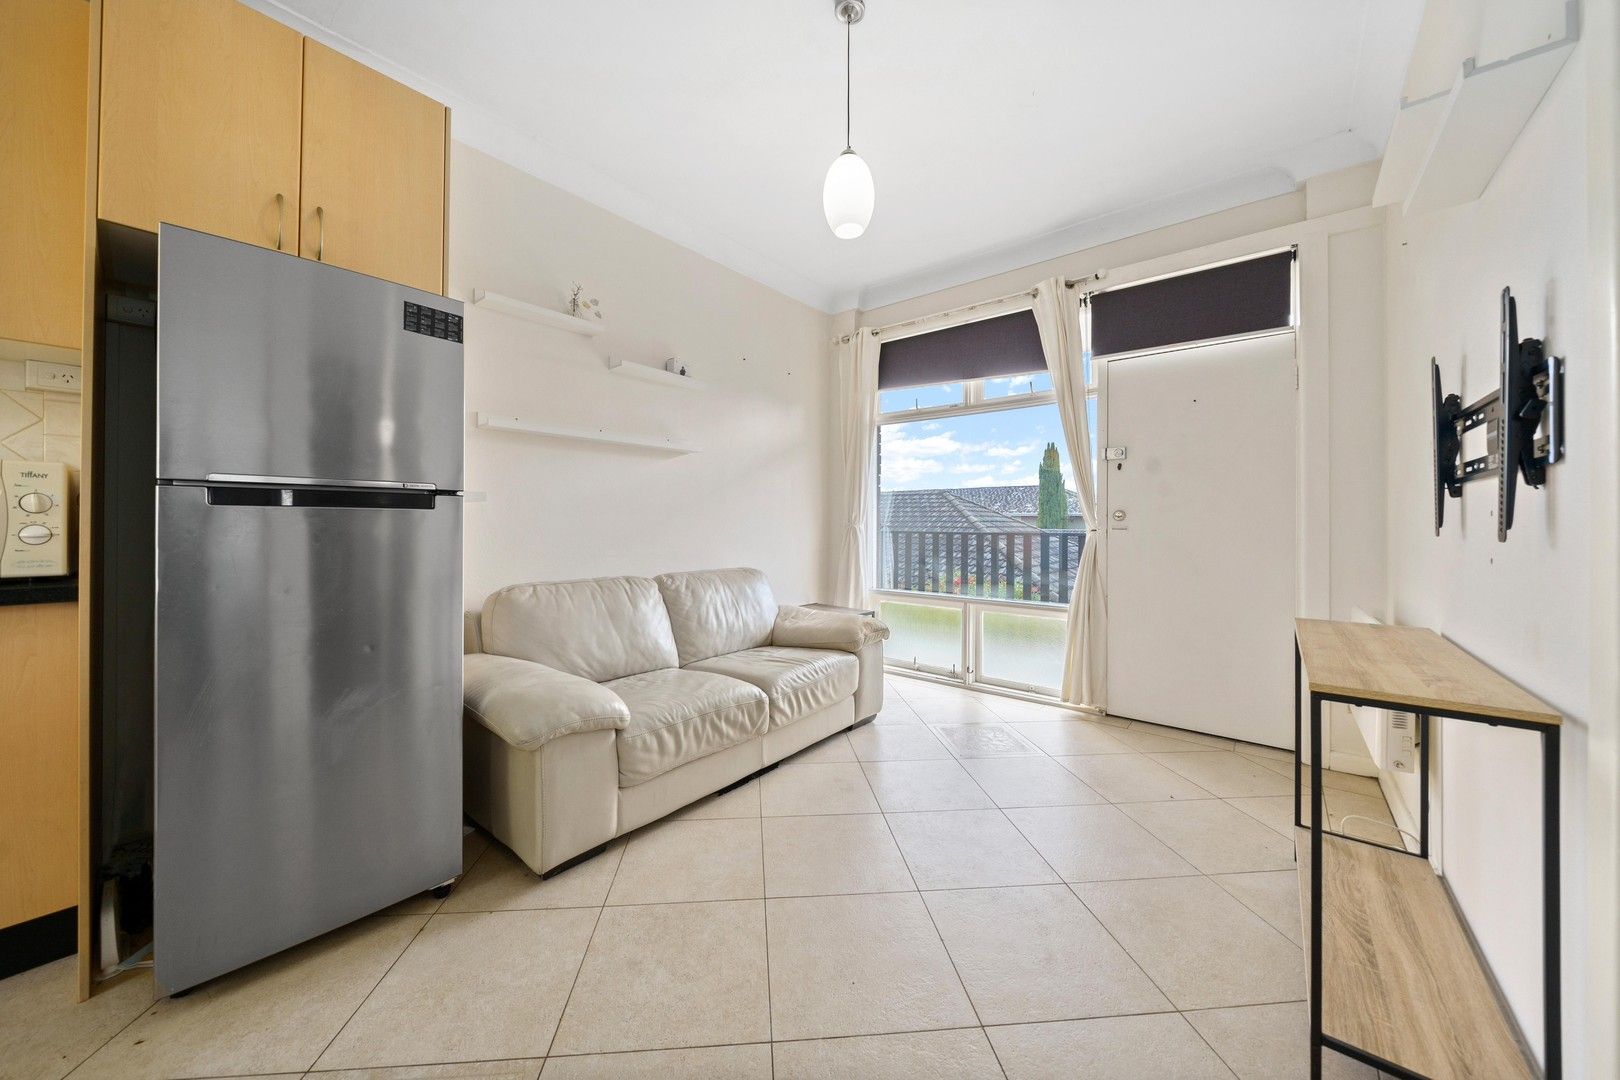 2 bedrooms Apartment / Unit / Flat in 21/7 Queensborough Road CROYDON PARK NSW, 2133